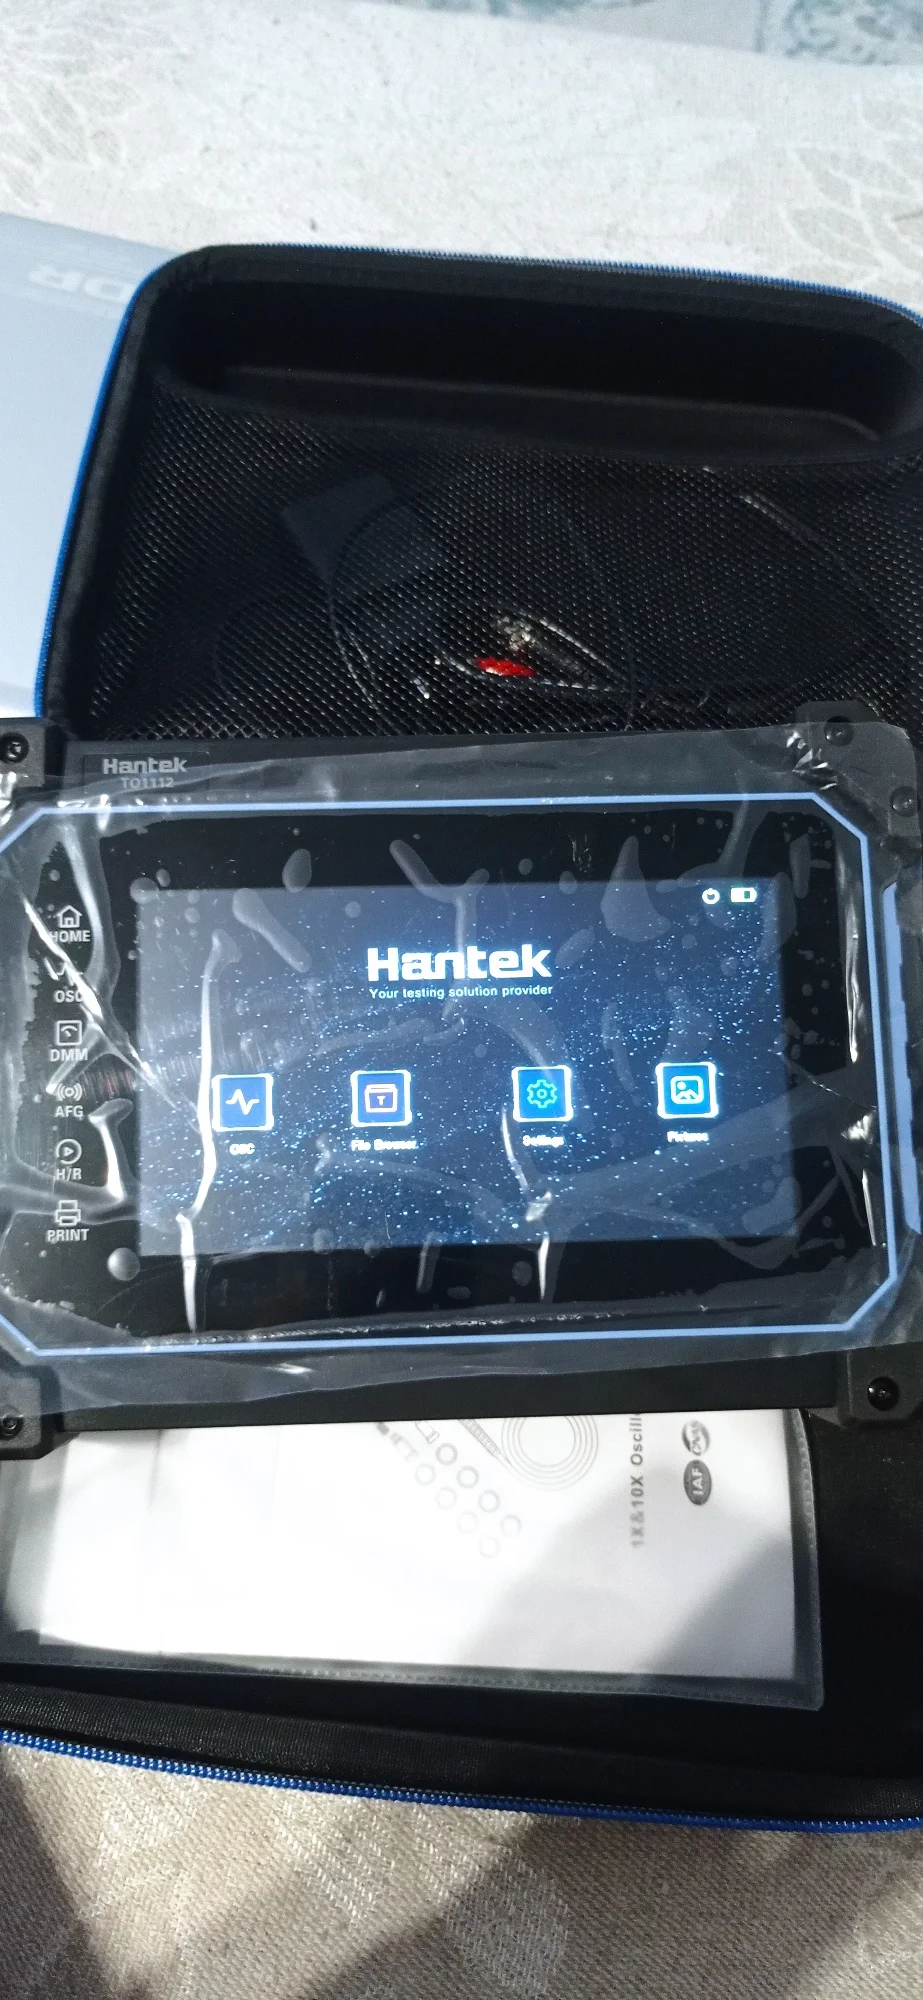 Hantek TO1112D Touch Screen Digital Oscilloscope 2 Channels 110MHz Portable USB Oscilloscopes Signal Source Multimeter photo review